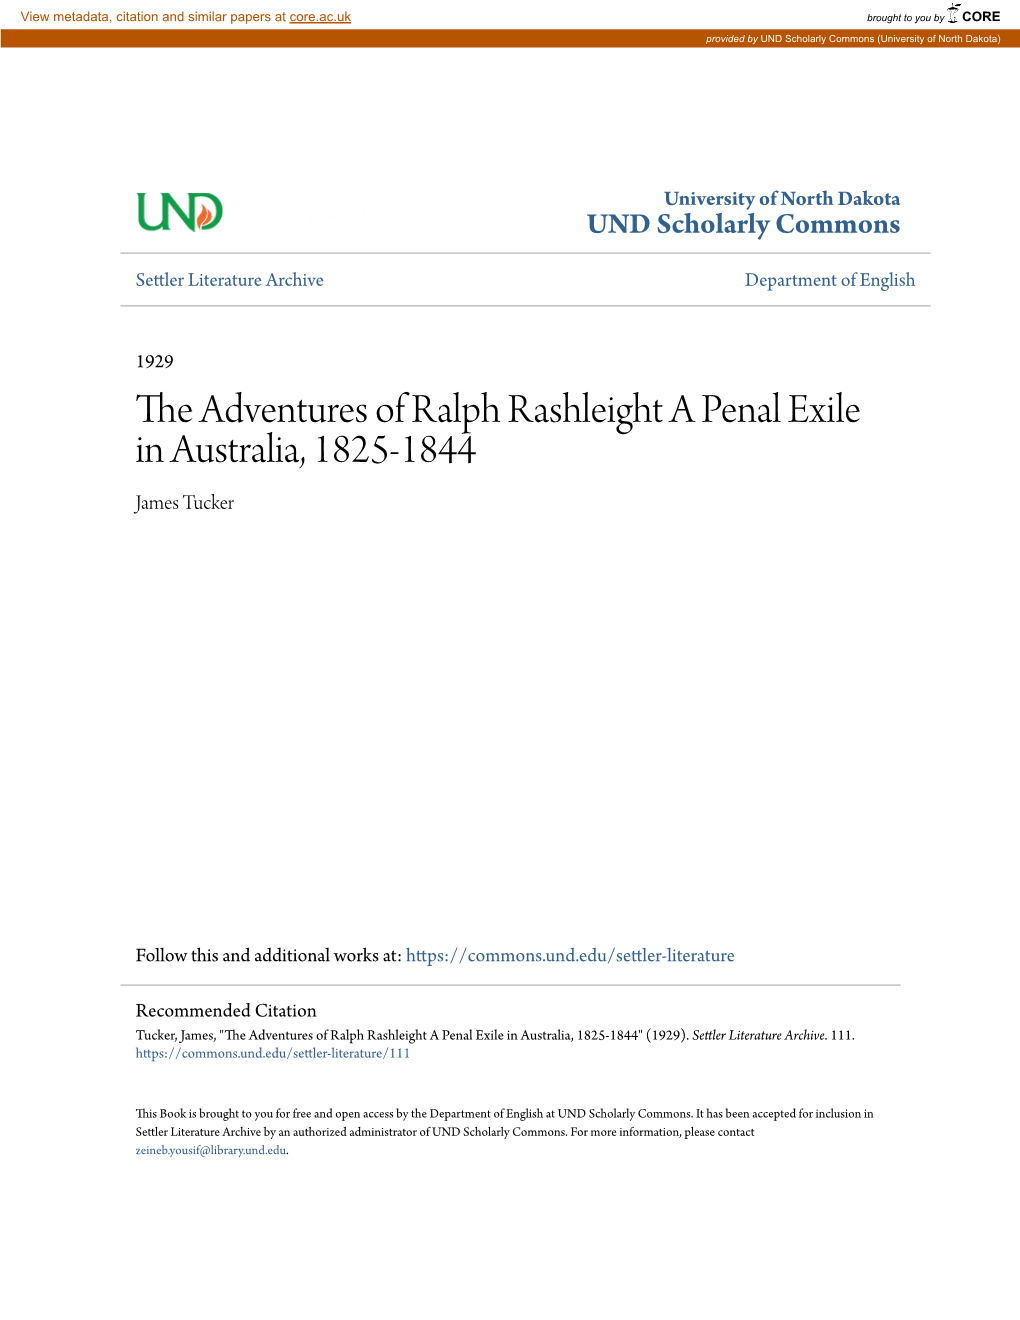 The Adventures of Ralph Rashleight a Penal Exile in Australia, 1825-1844 James Tucker